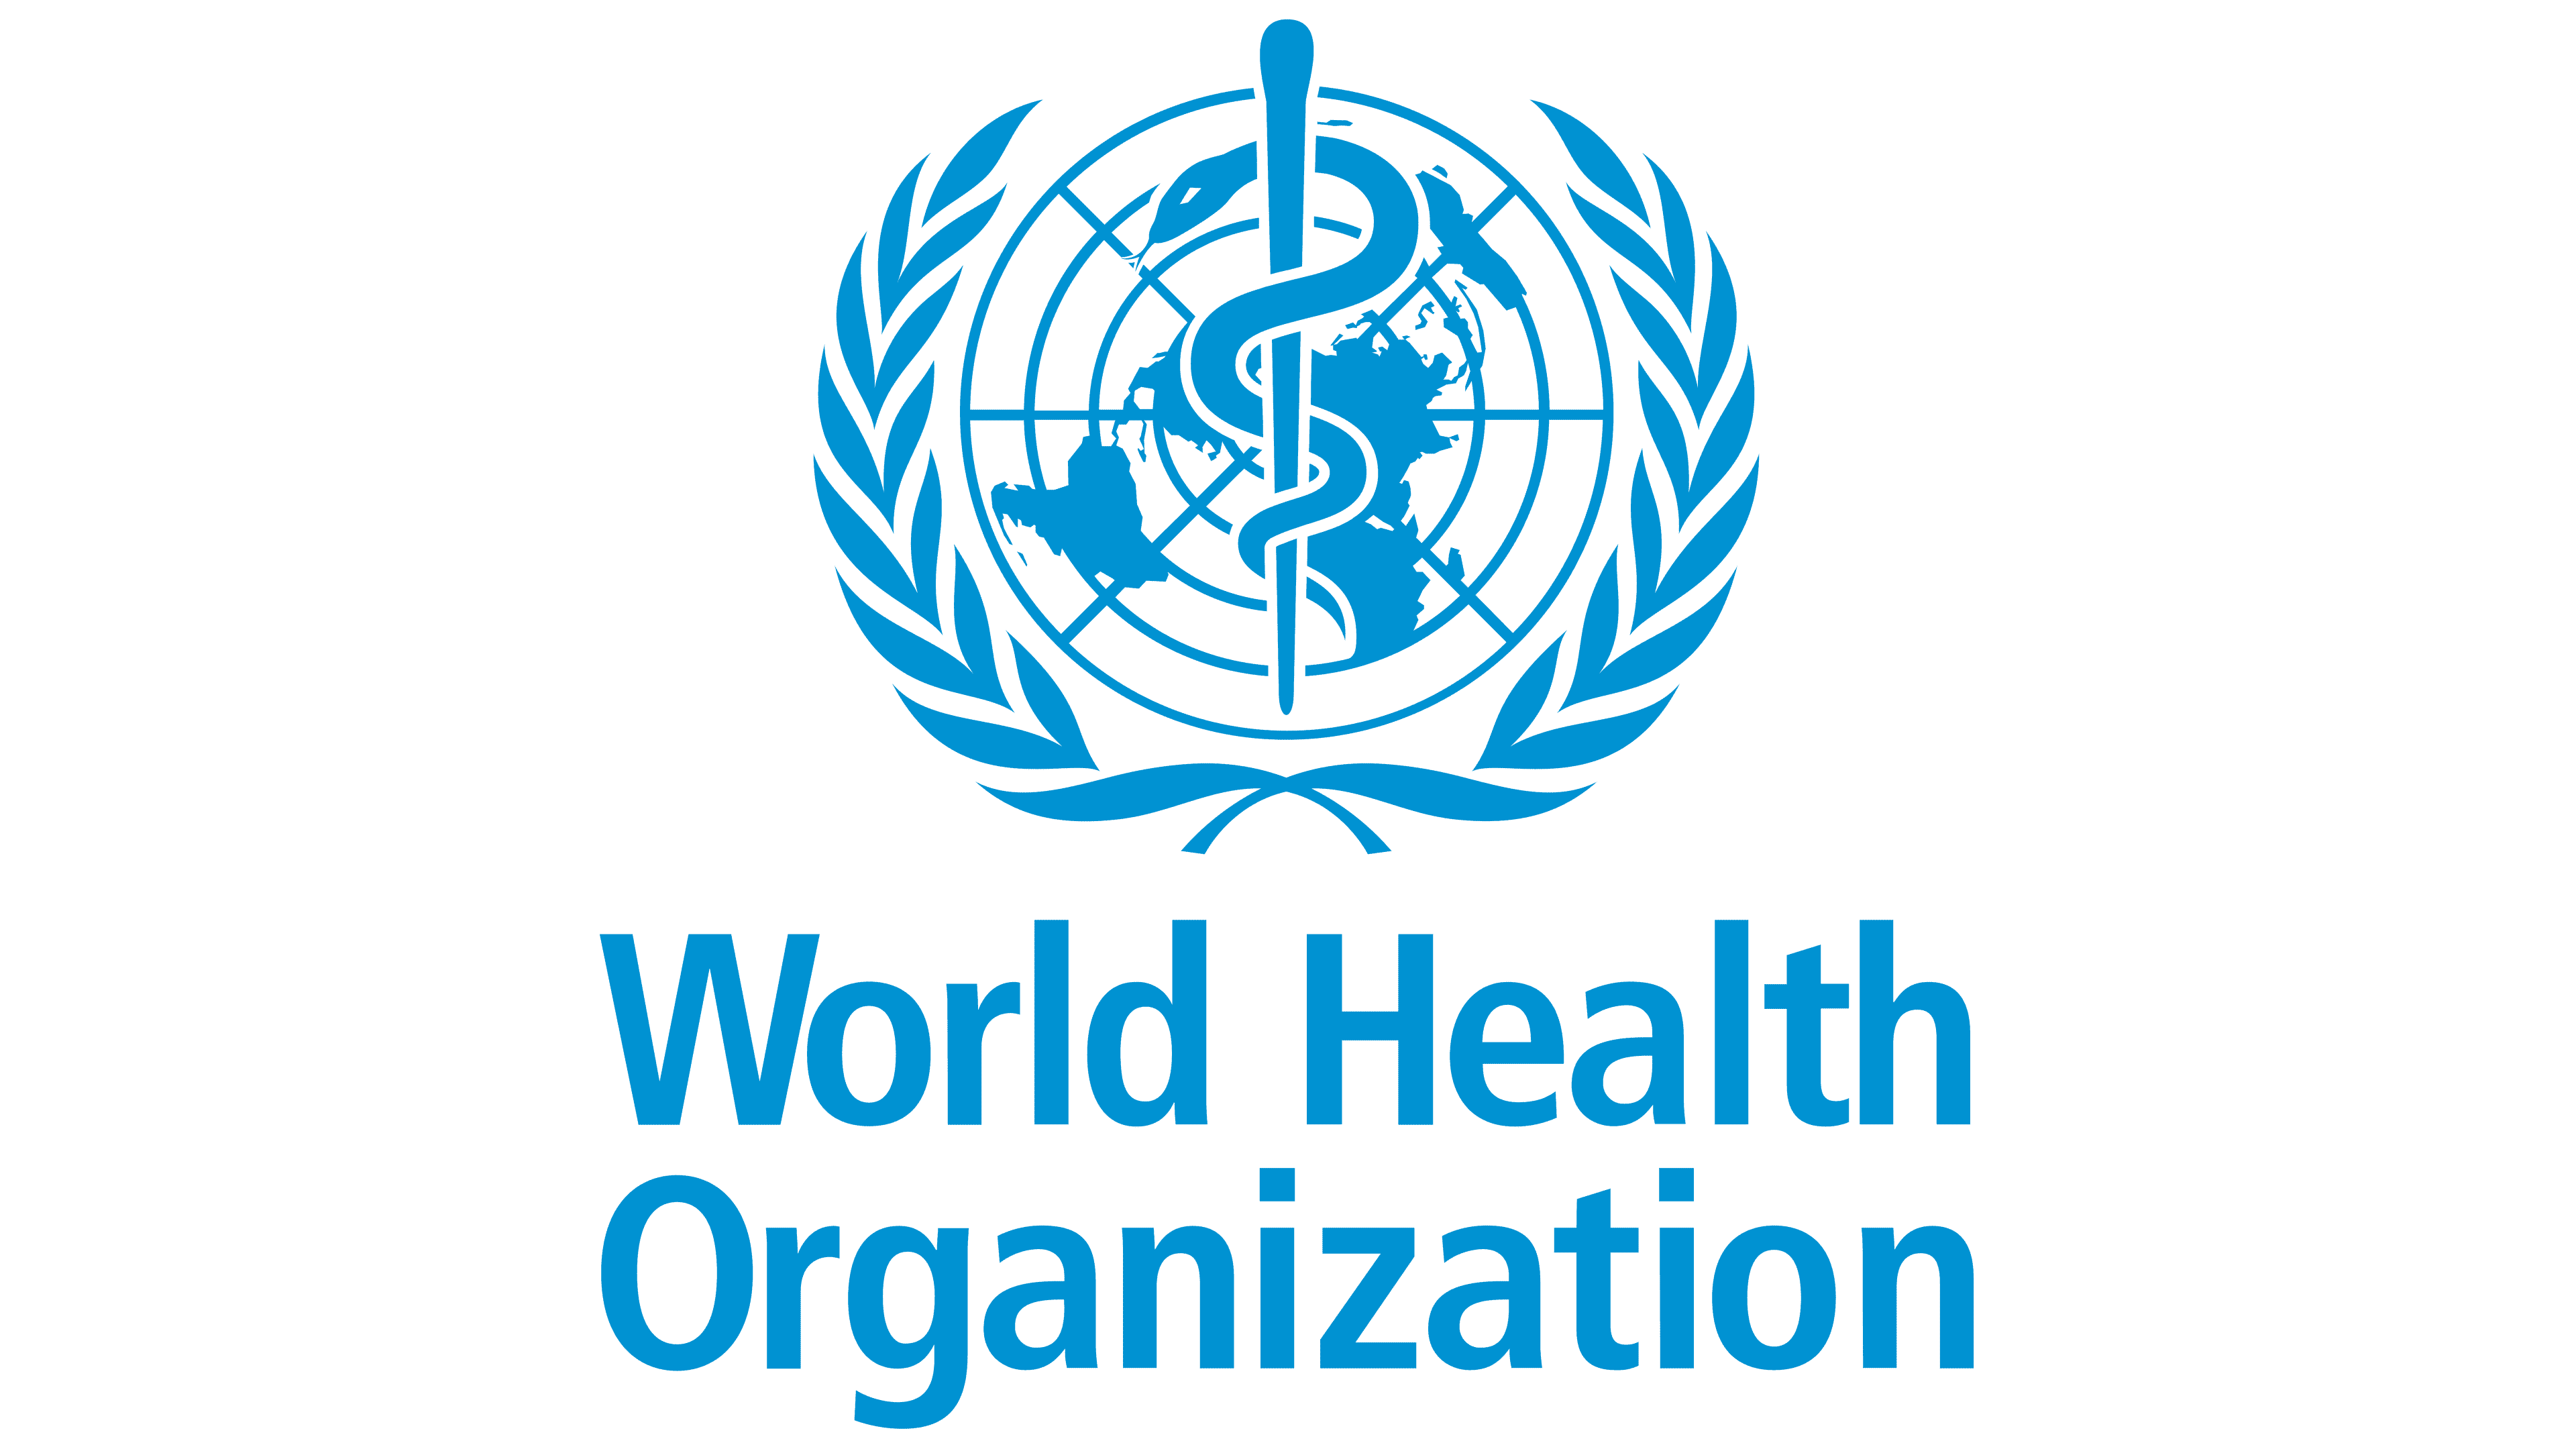 World Health Organization Logo, symbol, meaning, history, PNG, brand